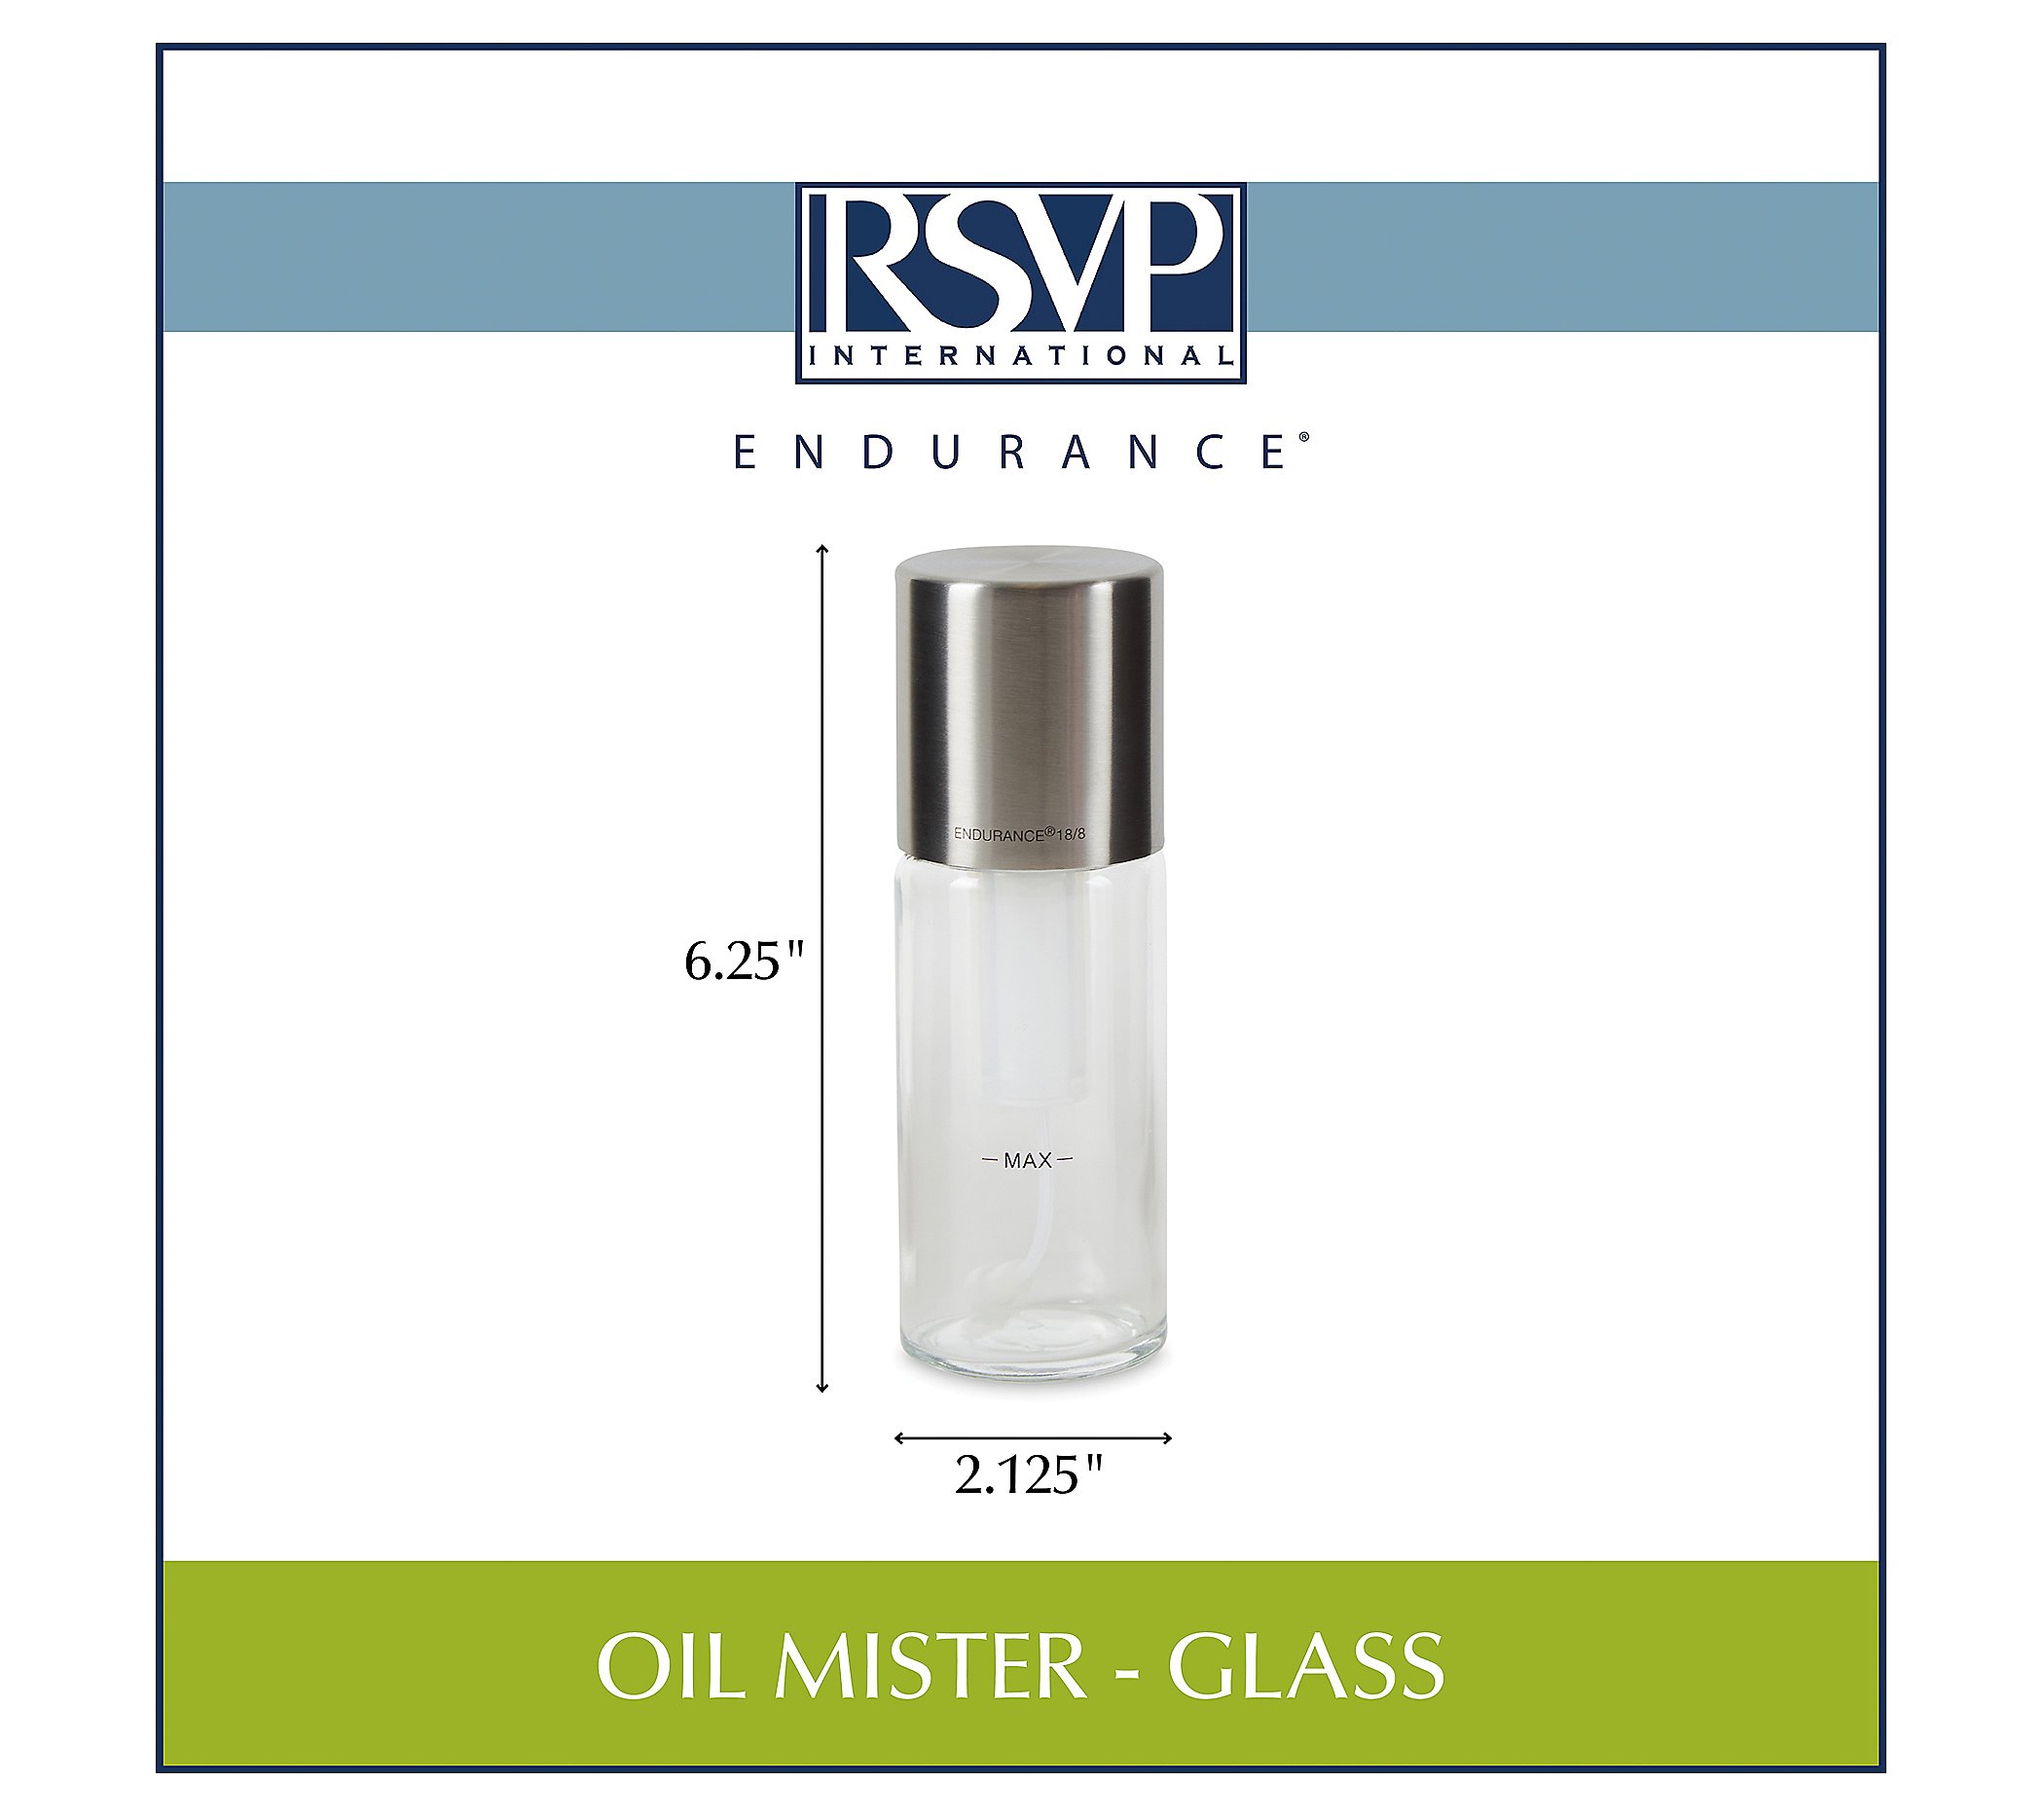 RSVP 4-oz Glass Oil Mister